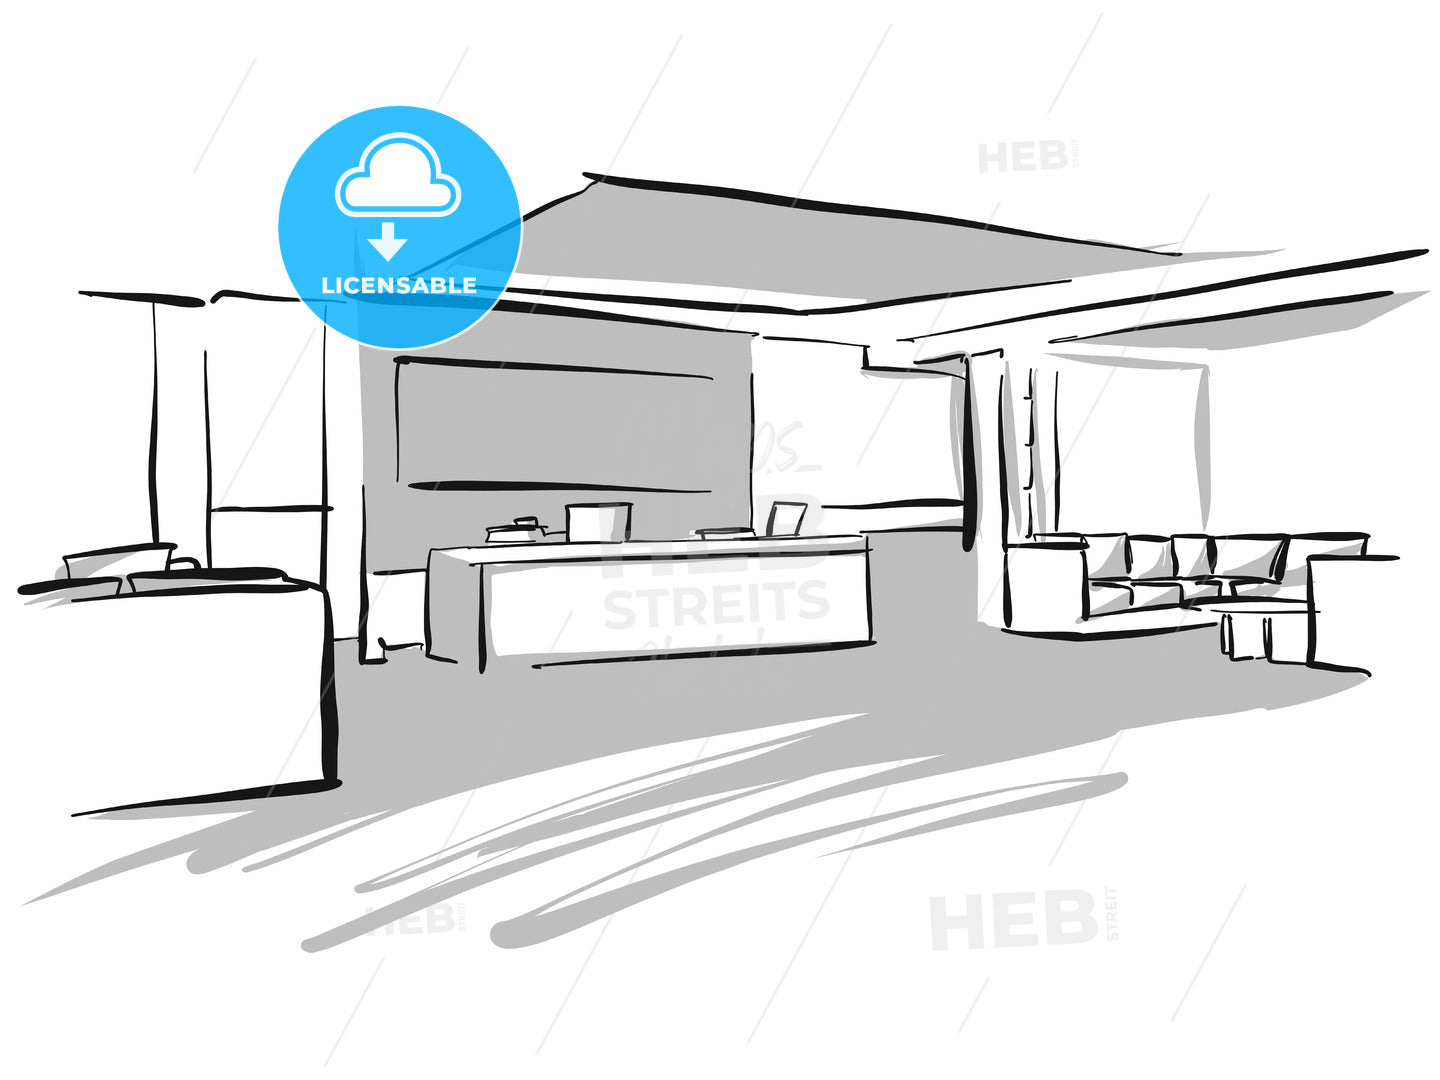 Office entry area design sketch – instant download